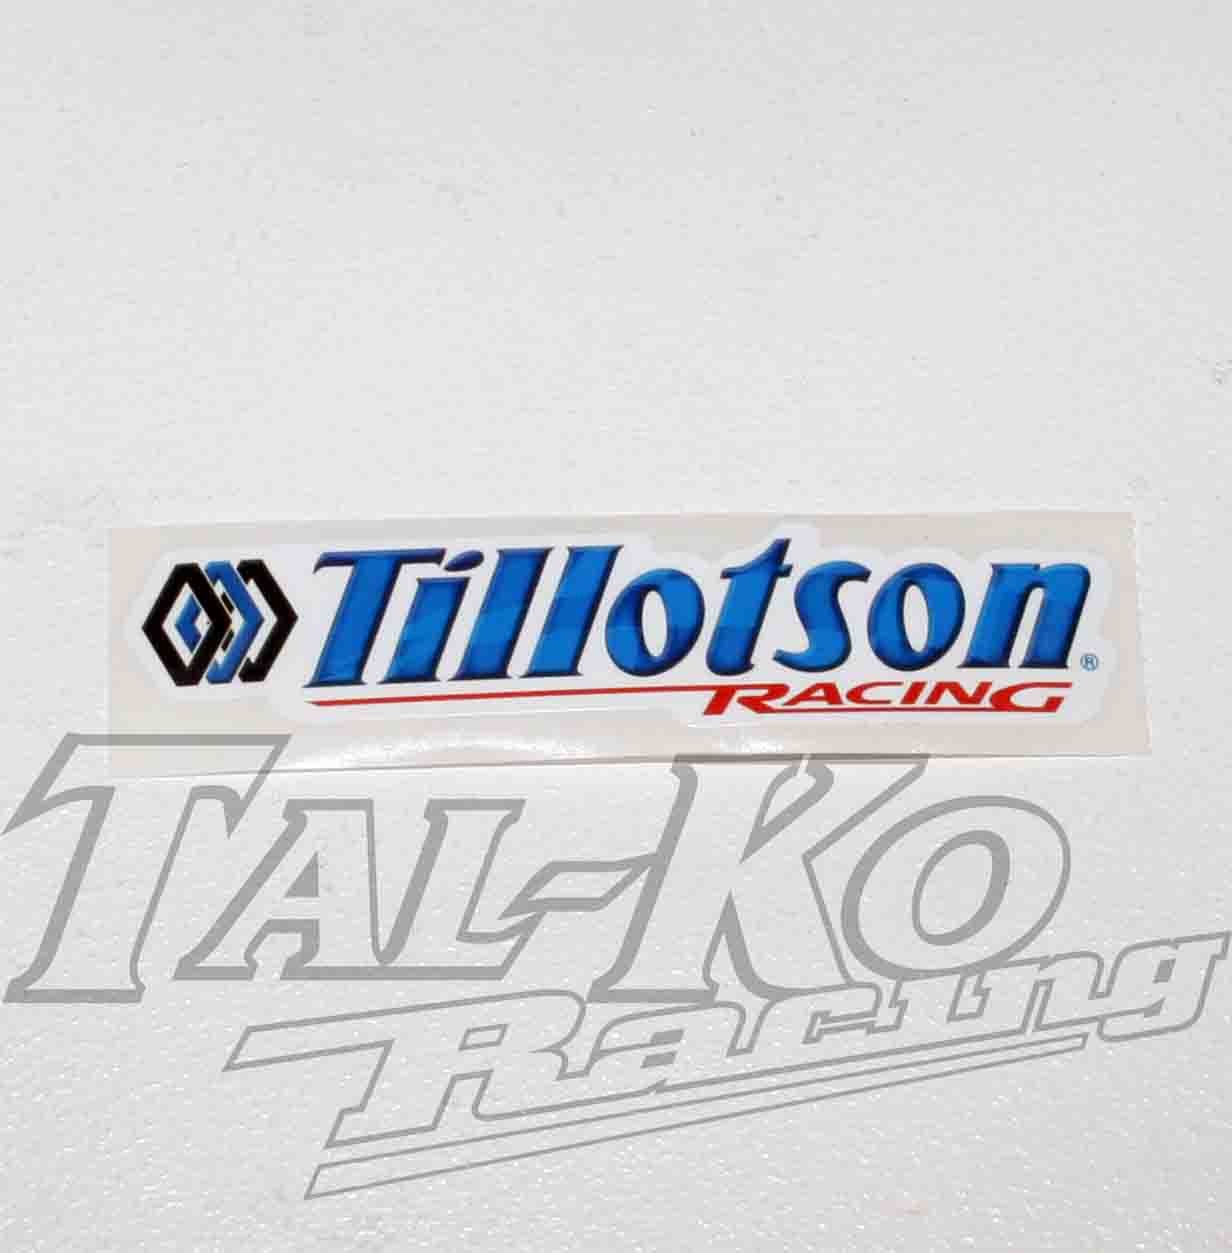 TILLOTSON RACING STICKER DECAL 118 x 27